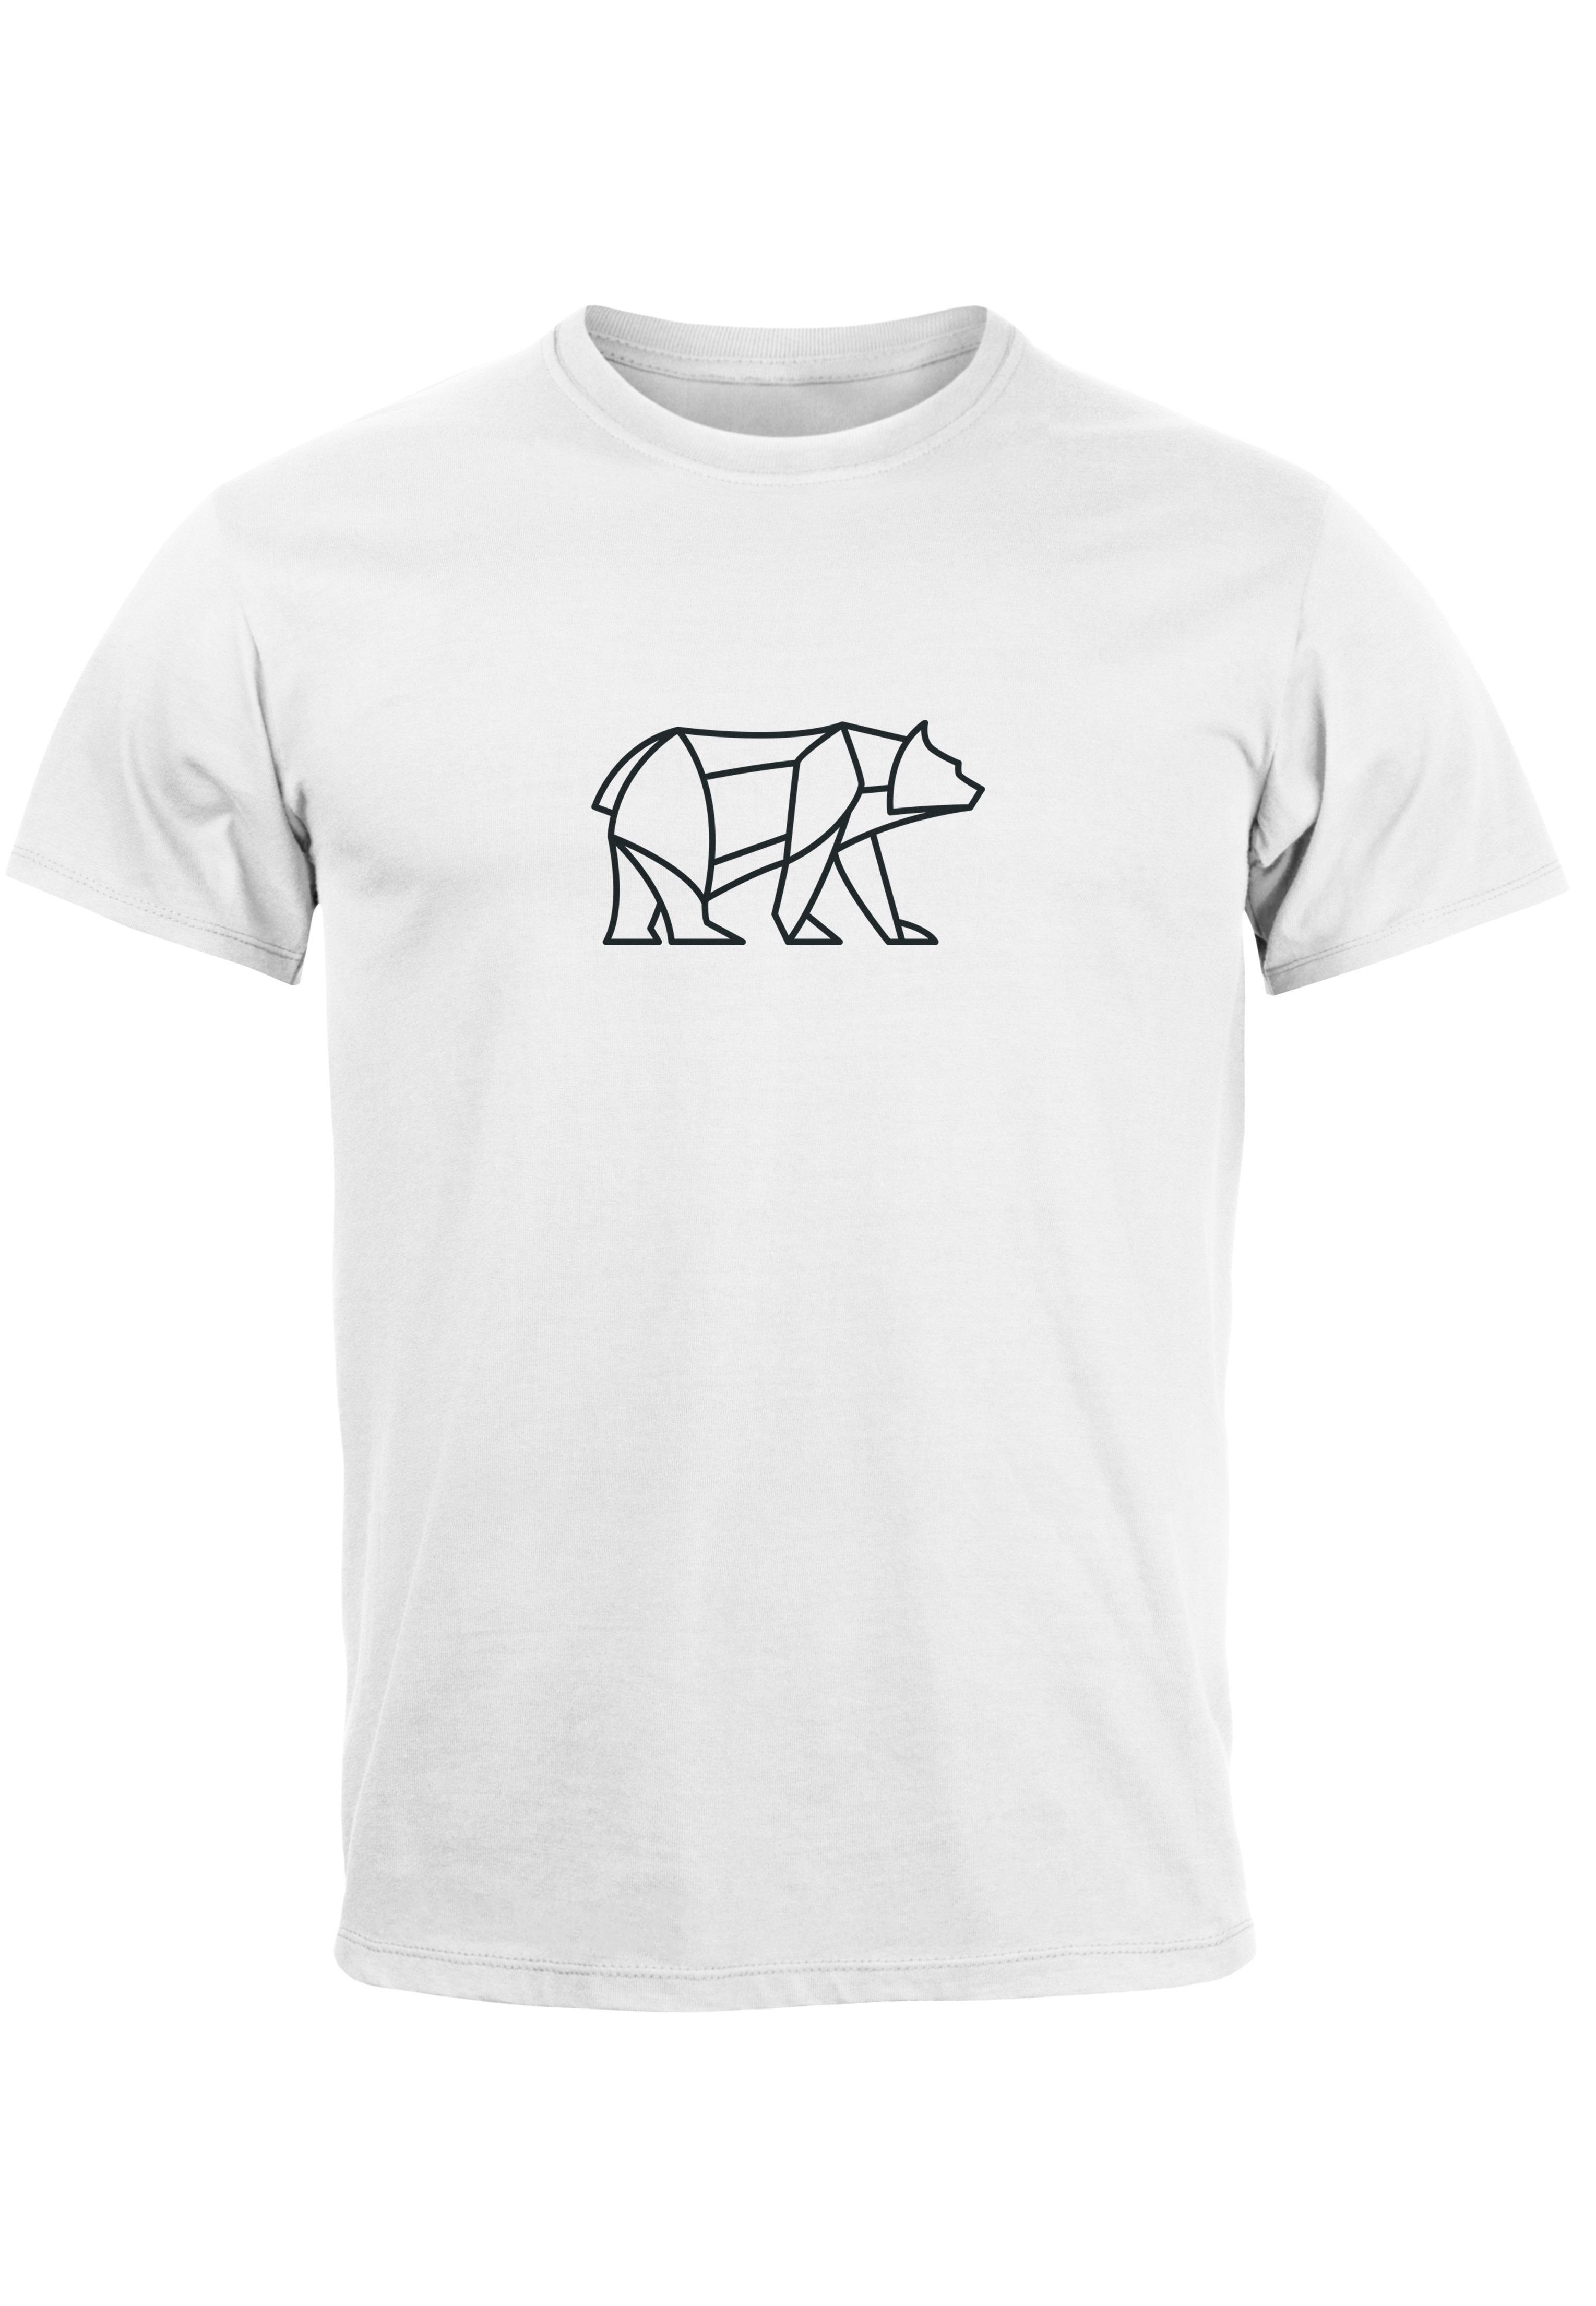 2 weiß Print Print-Shirt Outdoor Print Herren Neverless Bear T-Shirt Fashion Design Bär Tiermotiv Polygon mit Polygon